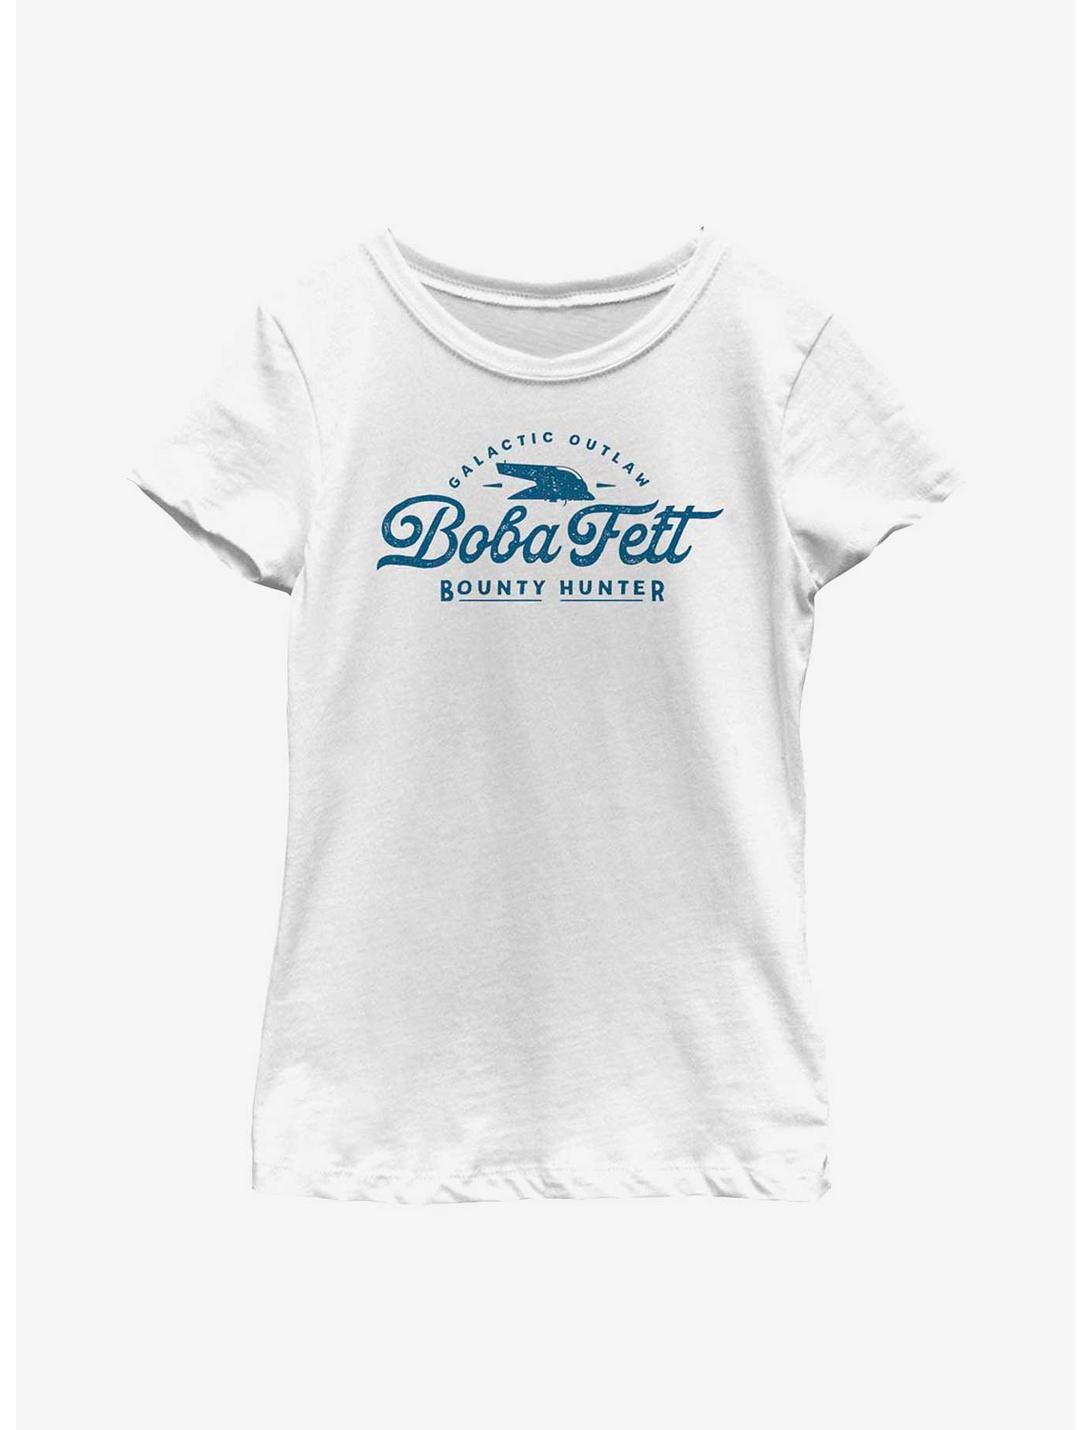 Star Wars: The Book Of Boba Fett Galactic Outlaw Boba Fett Youth Girls T-Shirt, WHITE, hi-res